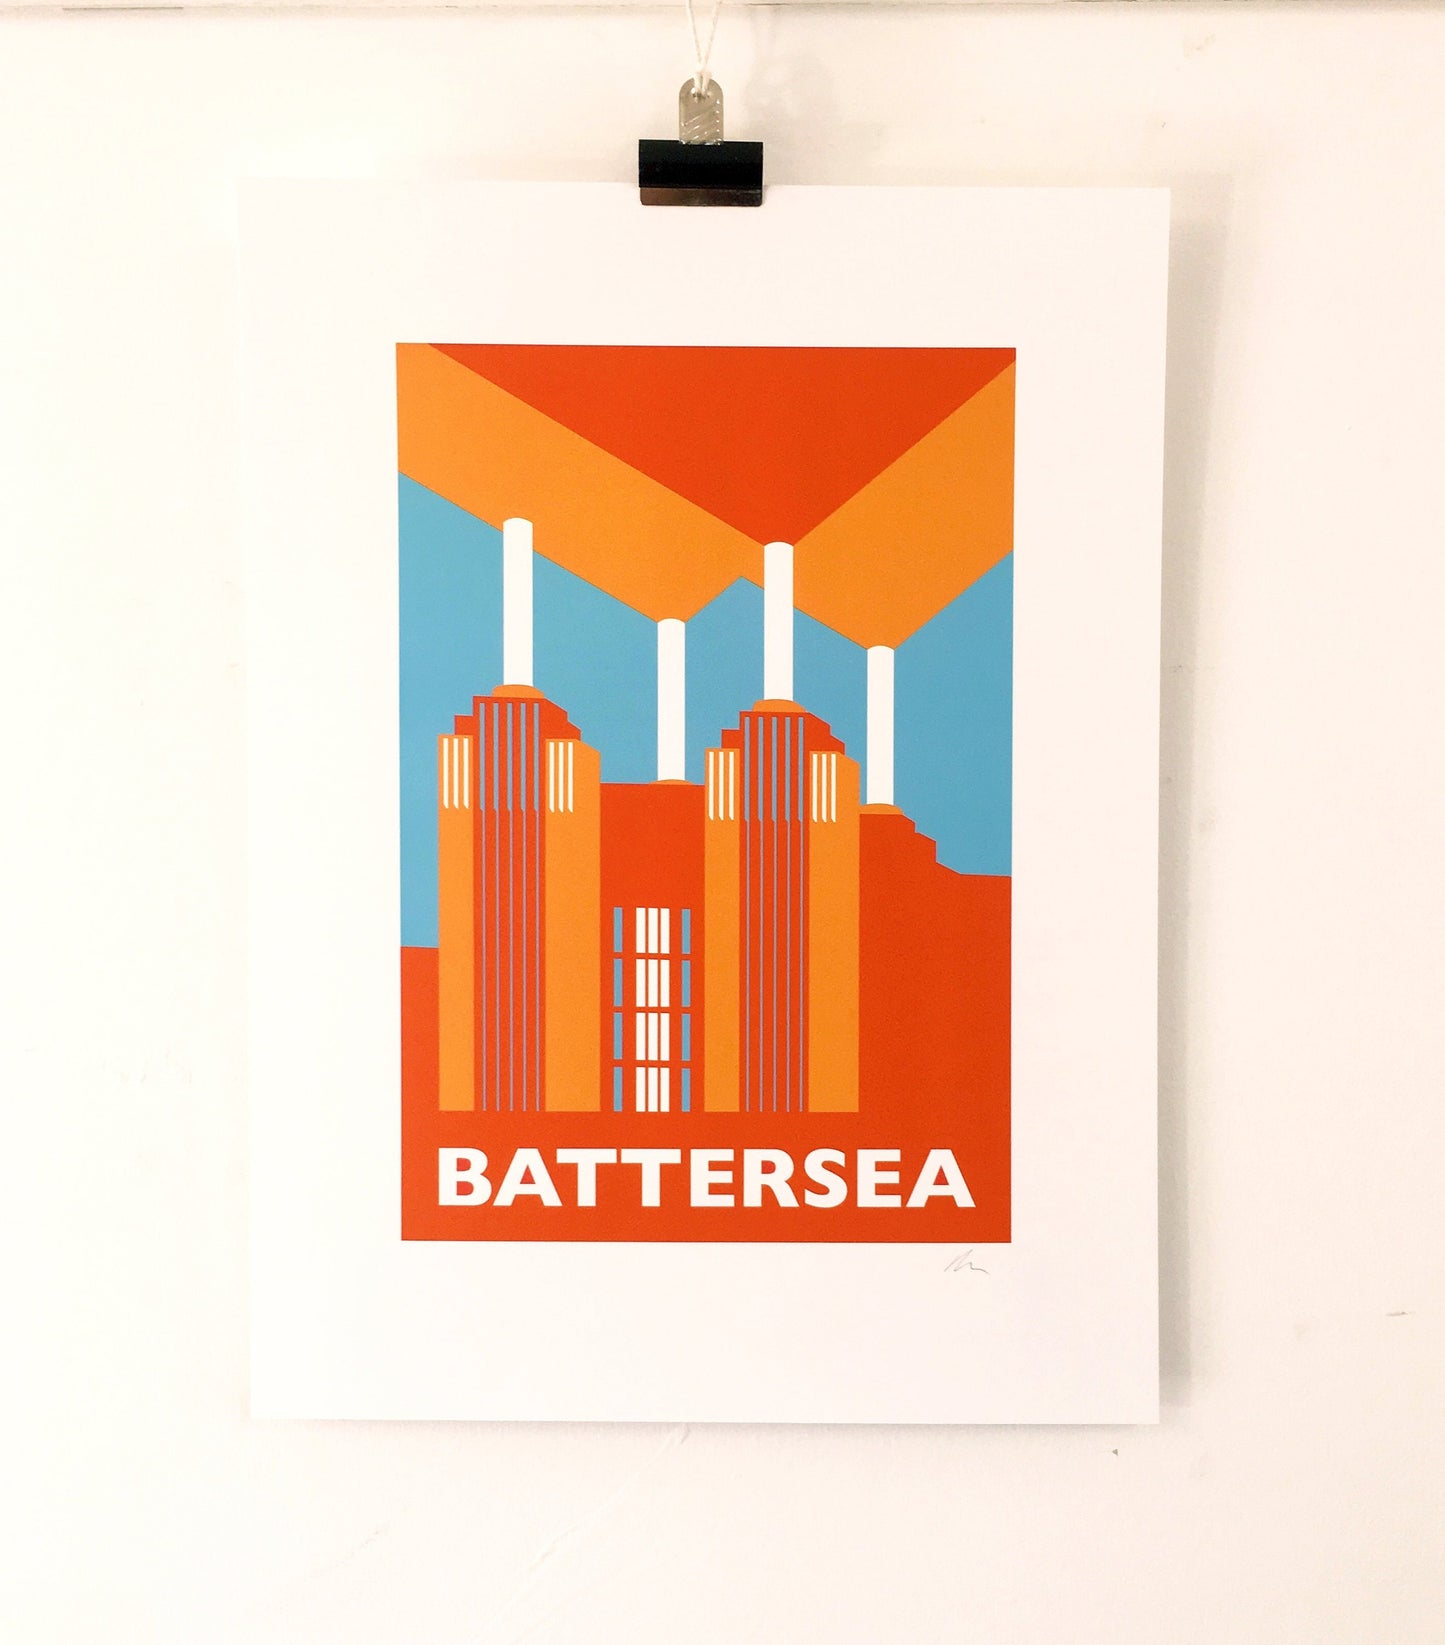 BATTERSEA POWER STATION Travel Poster - London Print - Art Deco - Illustration by Rebecca Pymar